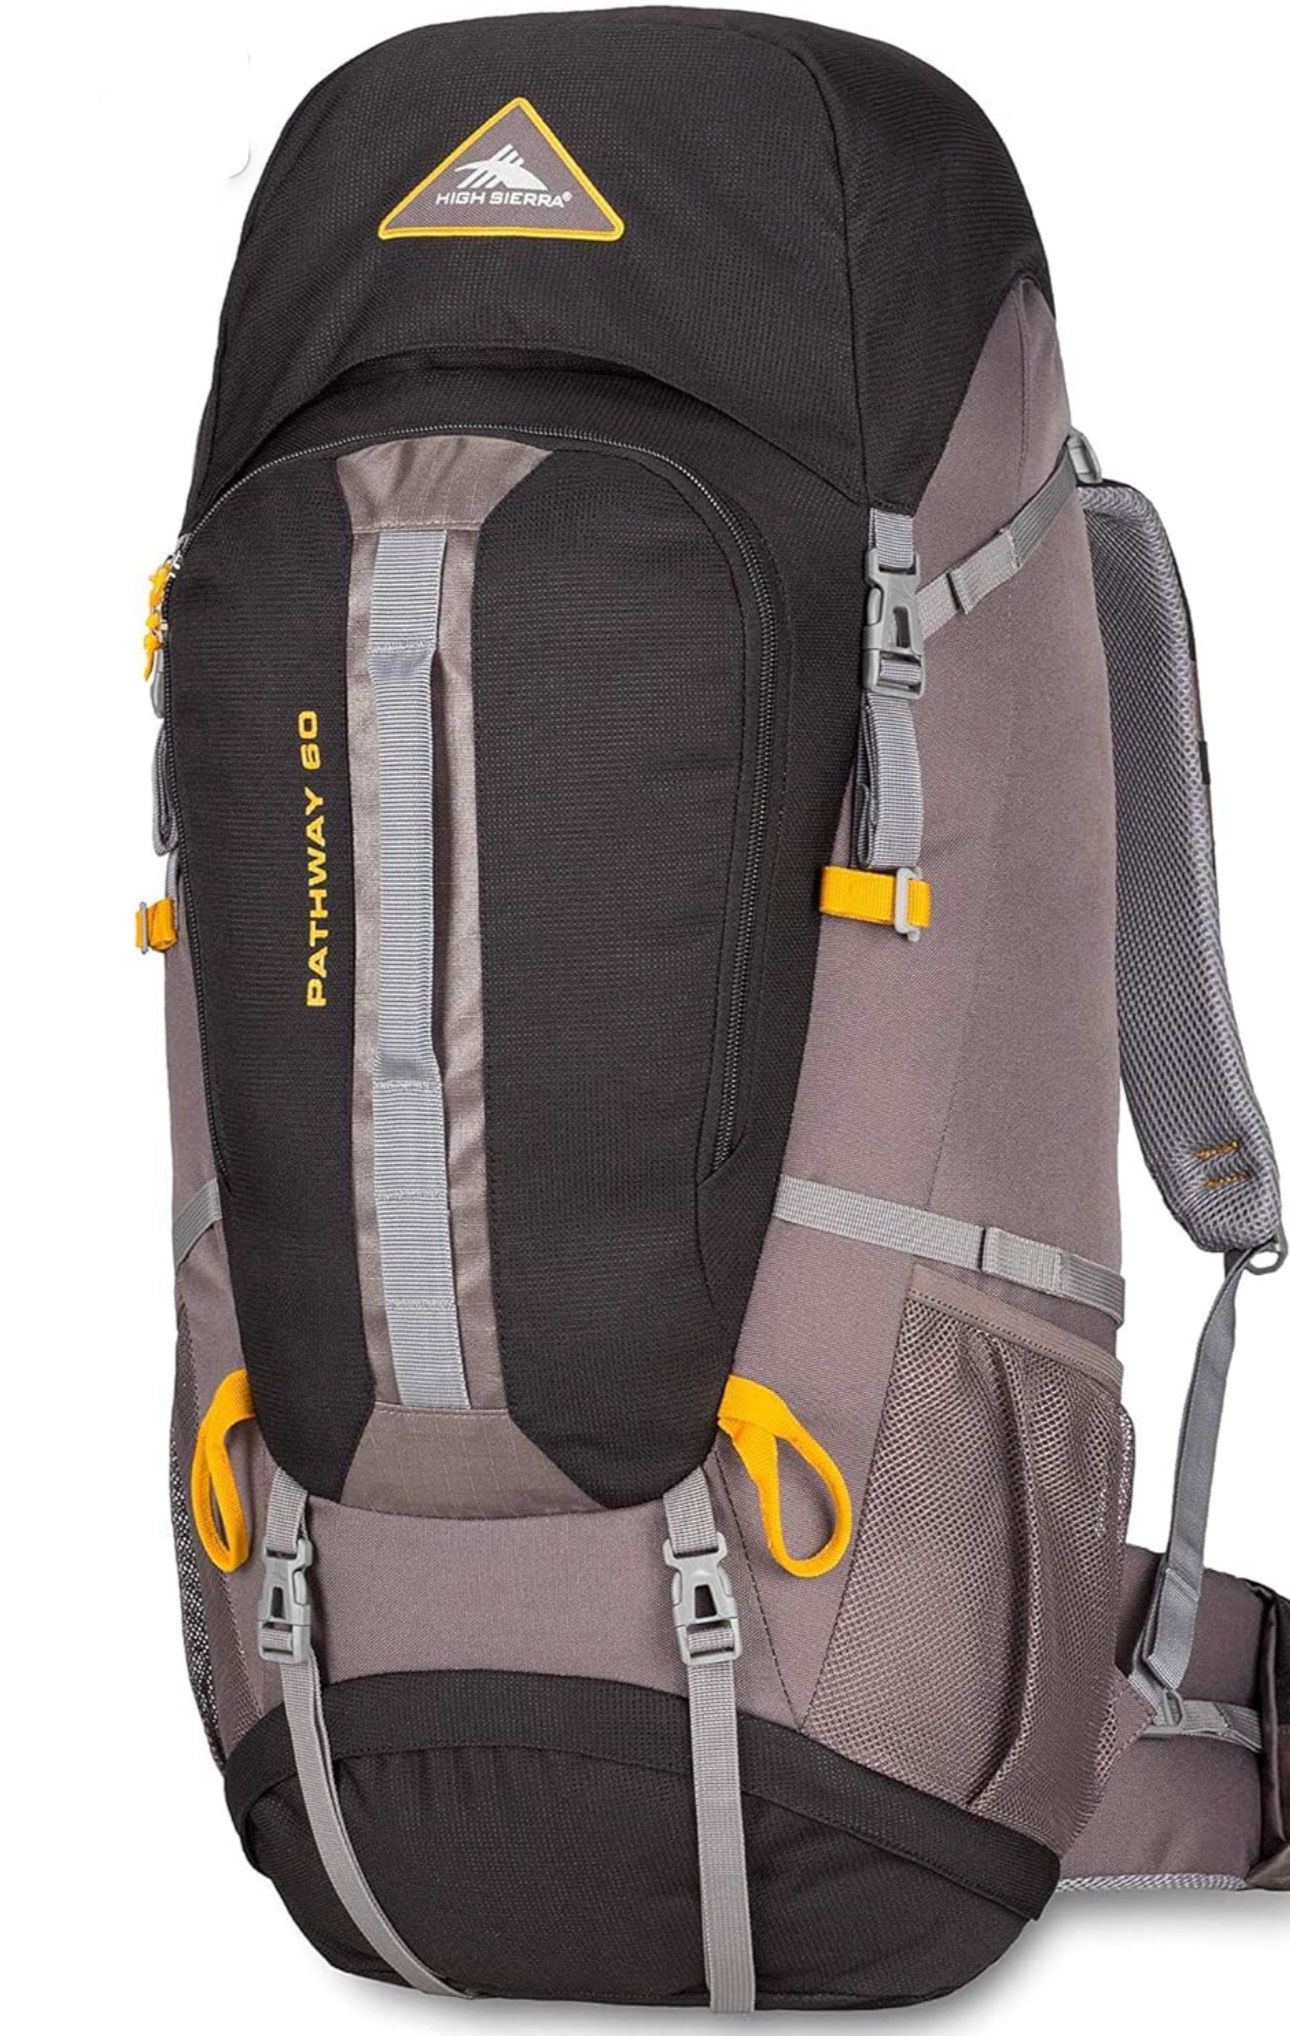 High Sierra Pathway Internal Frame Hiking Travel  Backpack, Black/Slate/Gold, 60L